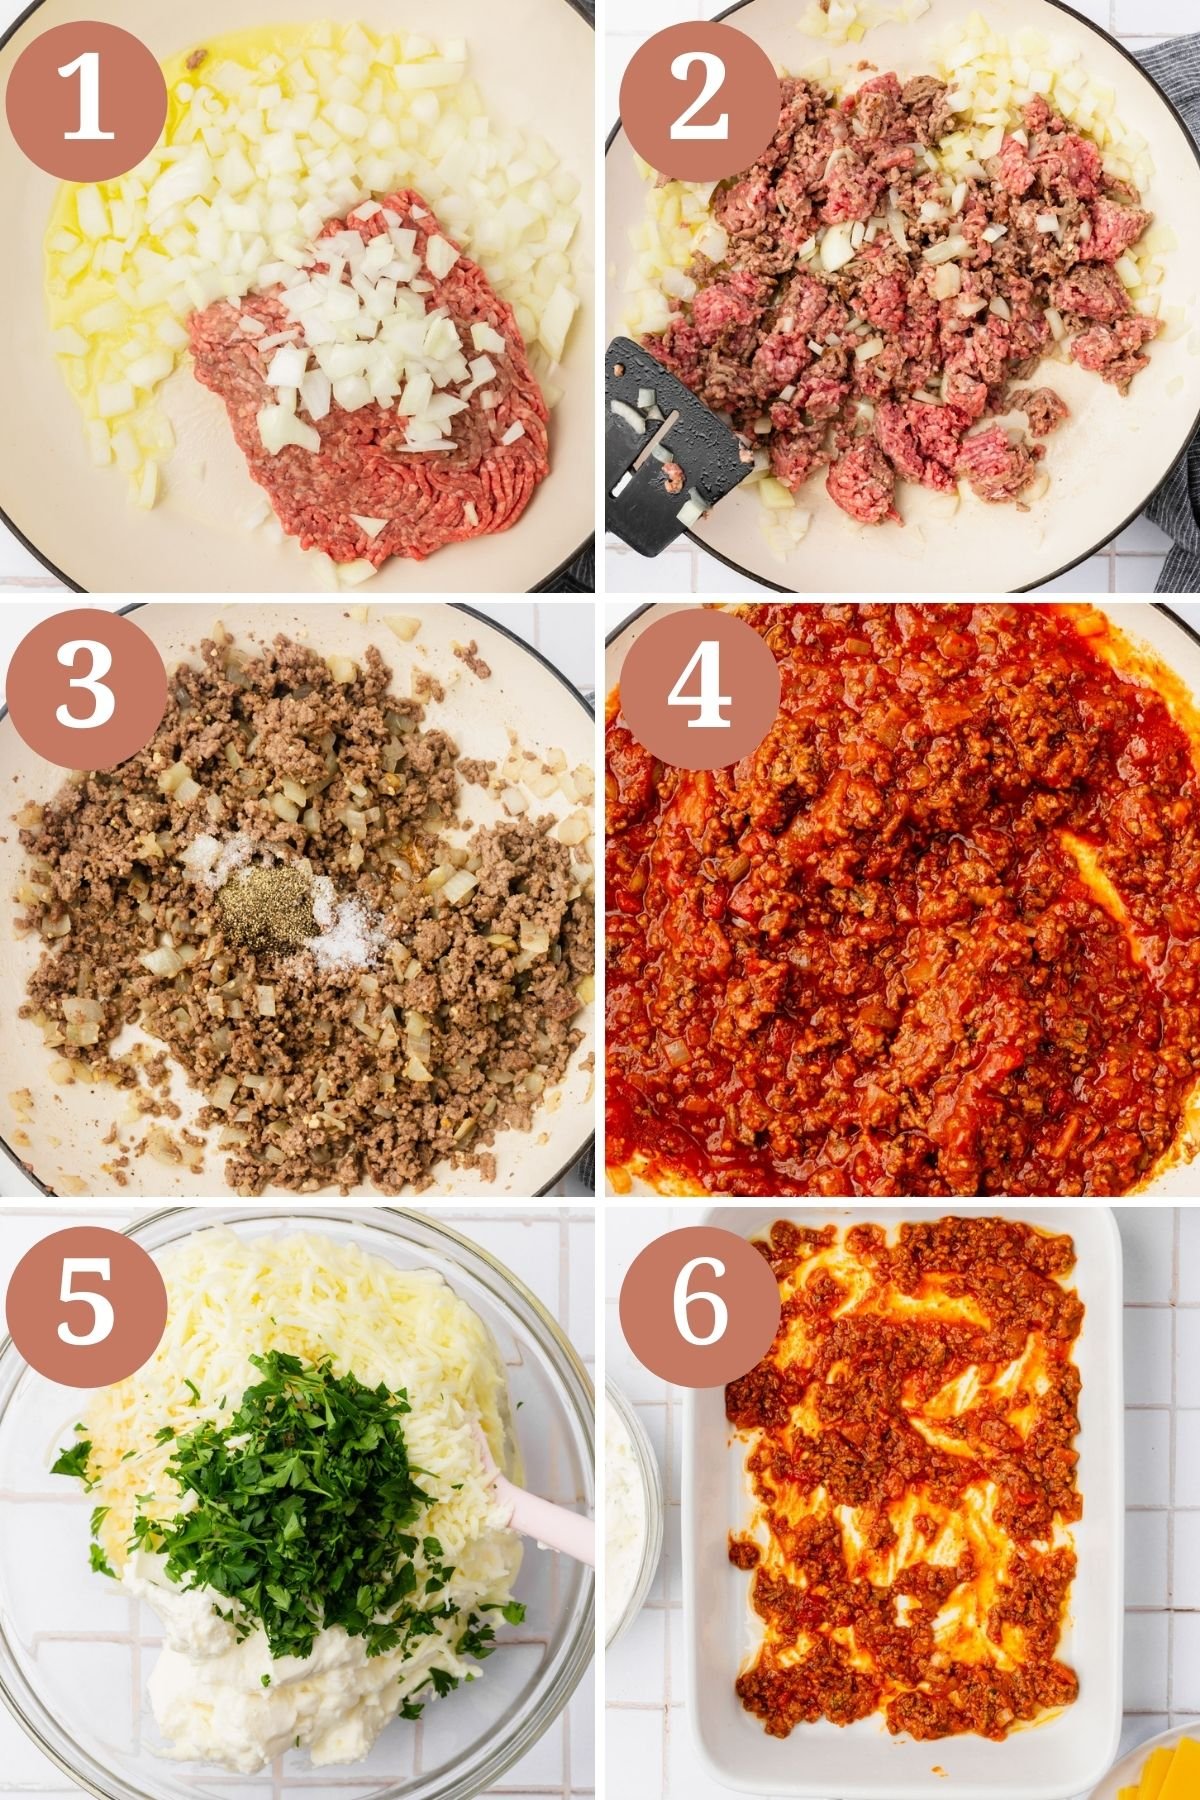 Steps 1-6 for making gluten-free lasagna.